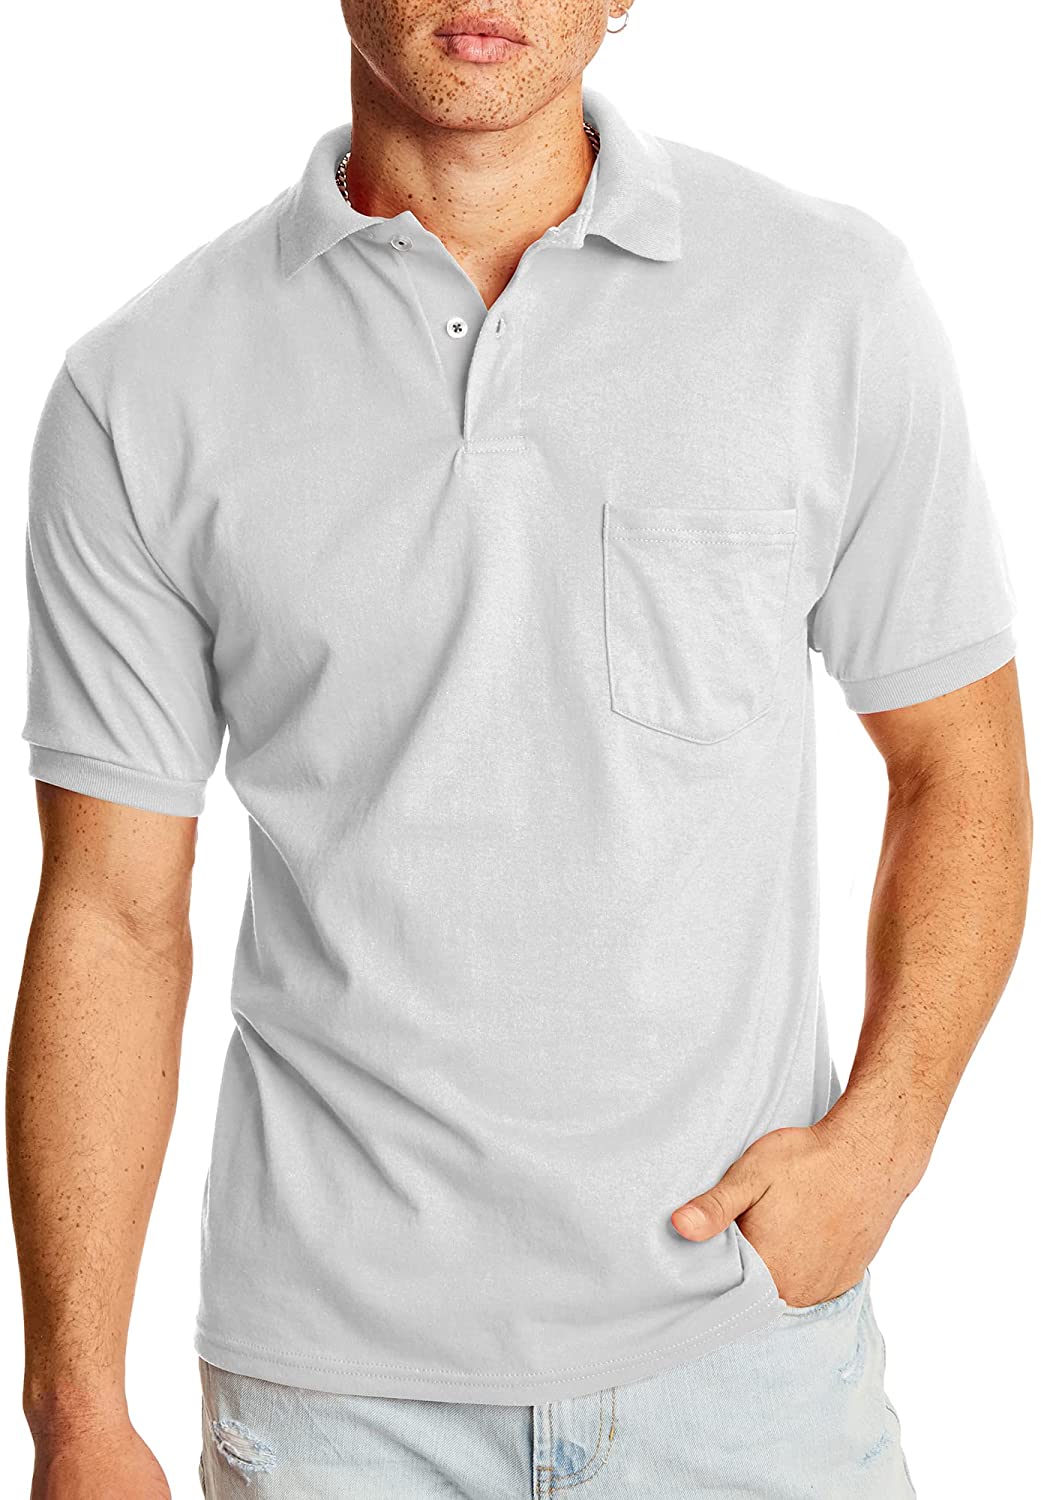 Hanes Men's Short-Sleeve Jersey Pocket Polo